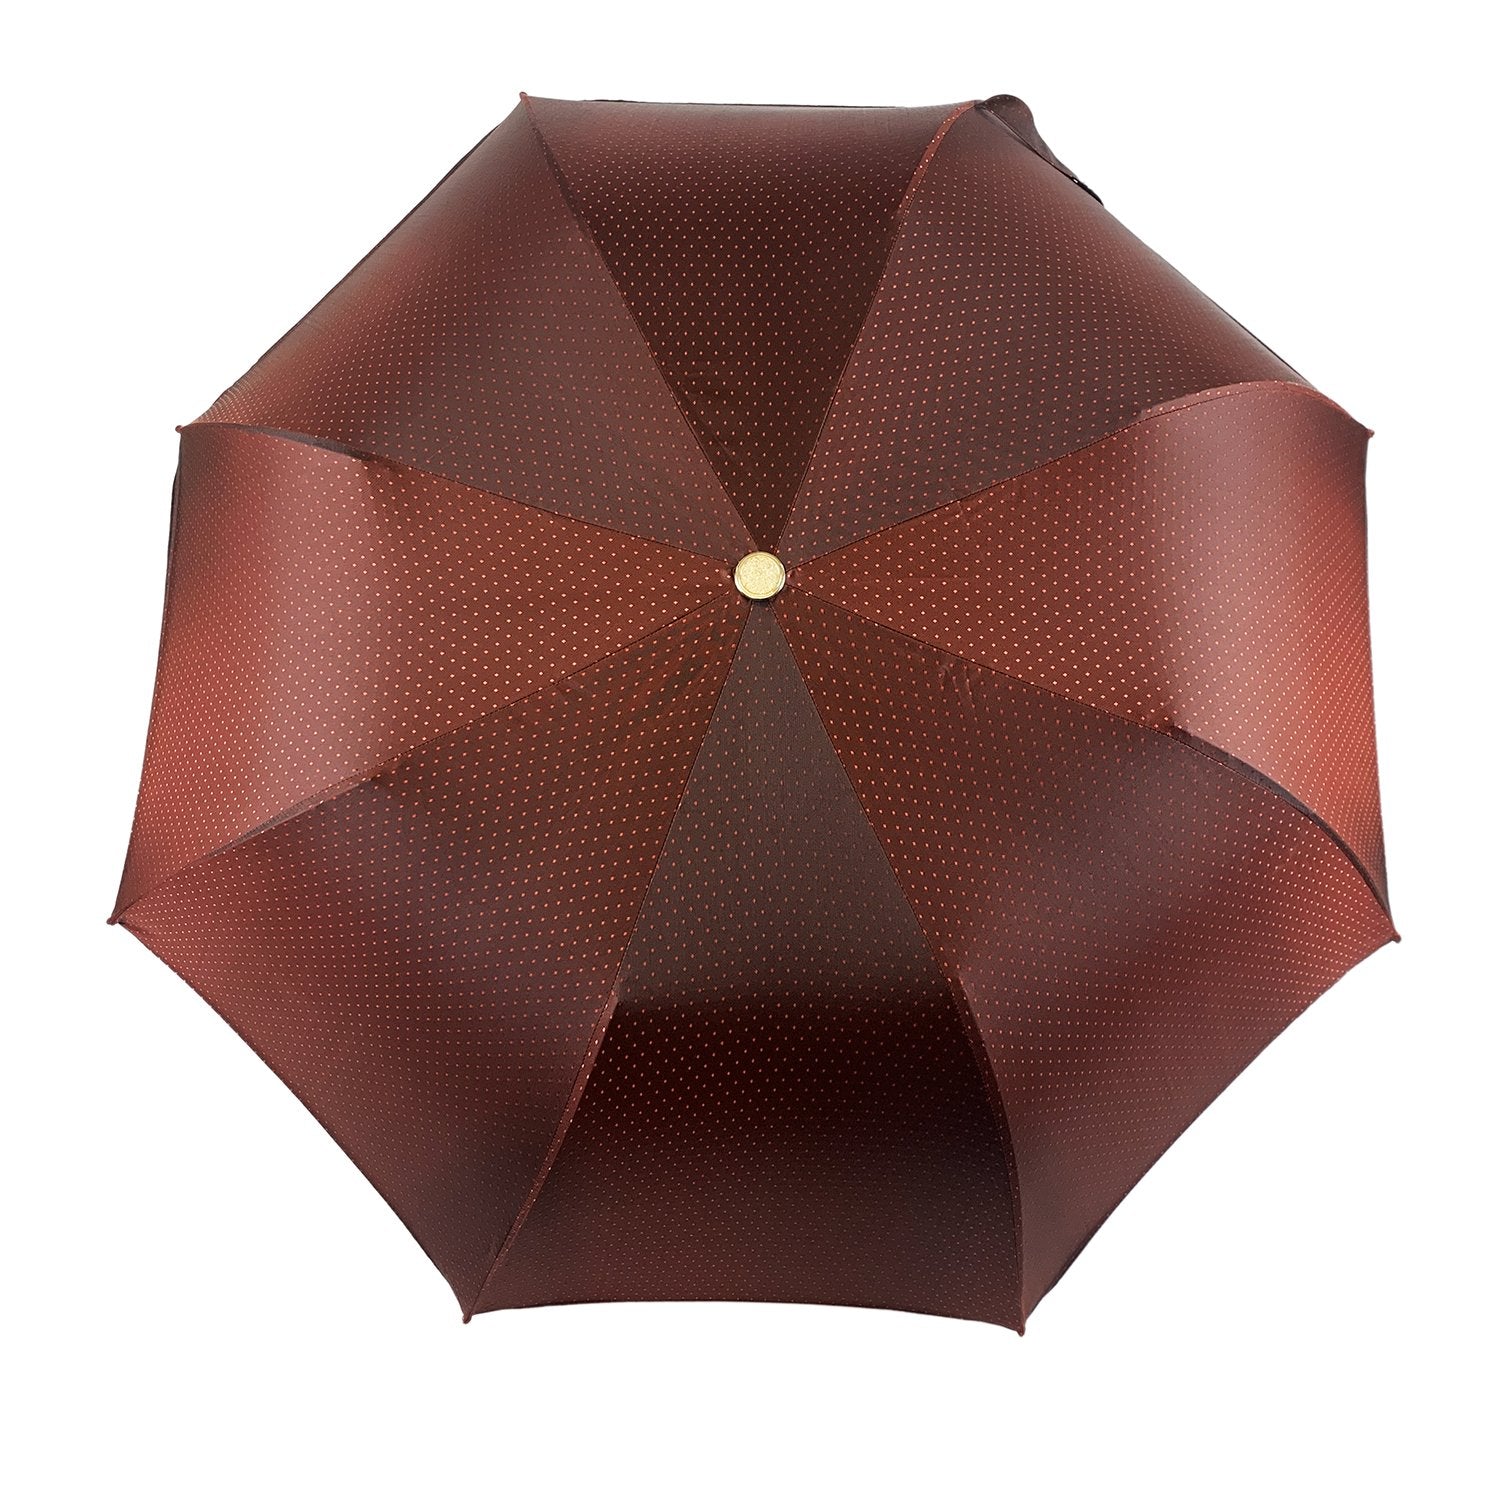 Elegant Burgundy Polka Dot Umbrella - IL MARCHESATO LUXURY UMBRELLAS, CANES AND SHOEHORNS